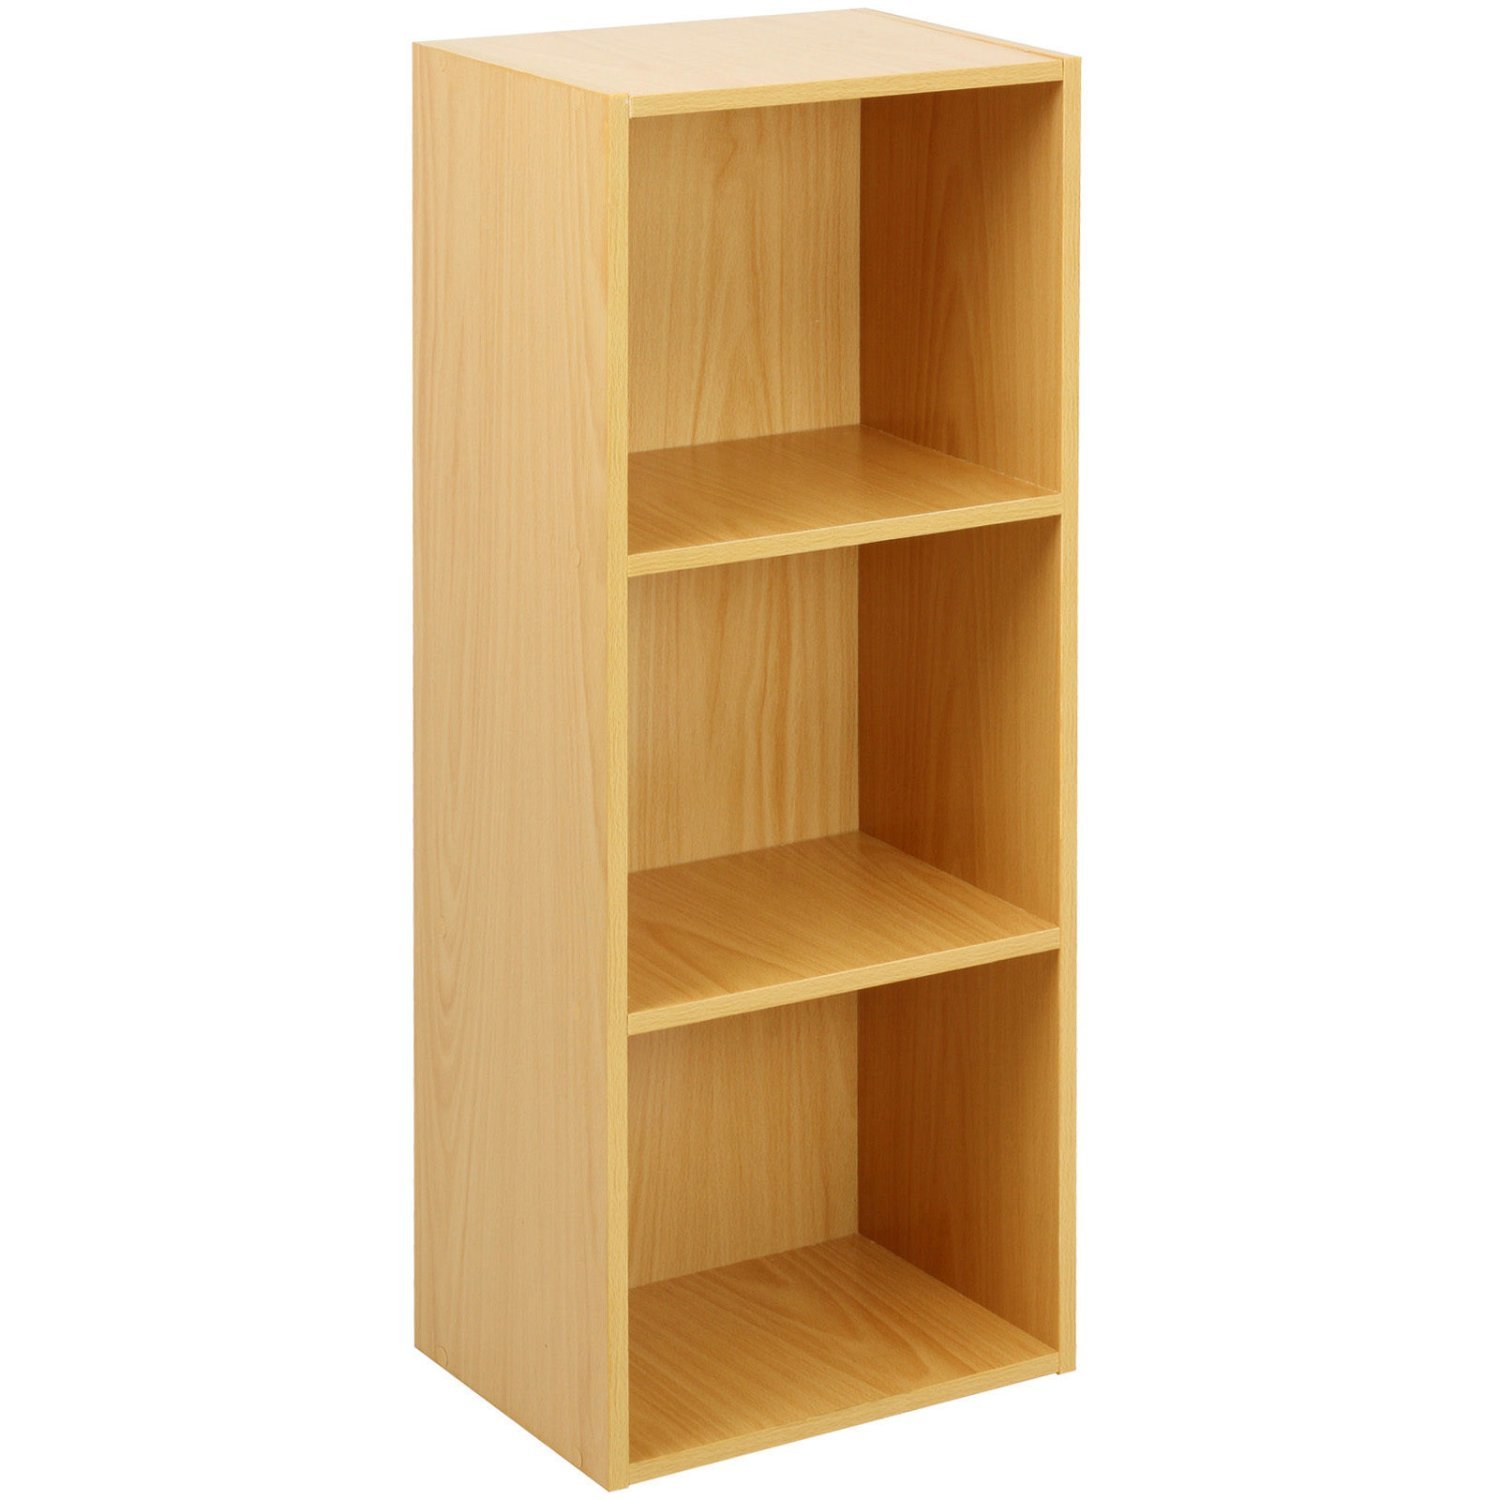 Oypla 3 Tier Wooden Shelf Beech Bookcase Shelving Storage Display Rack 